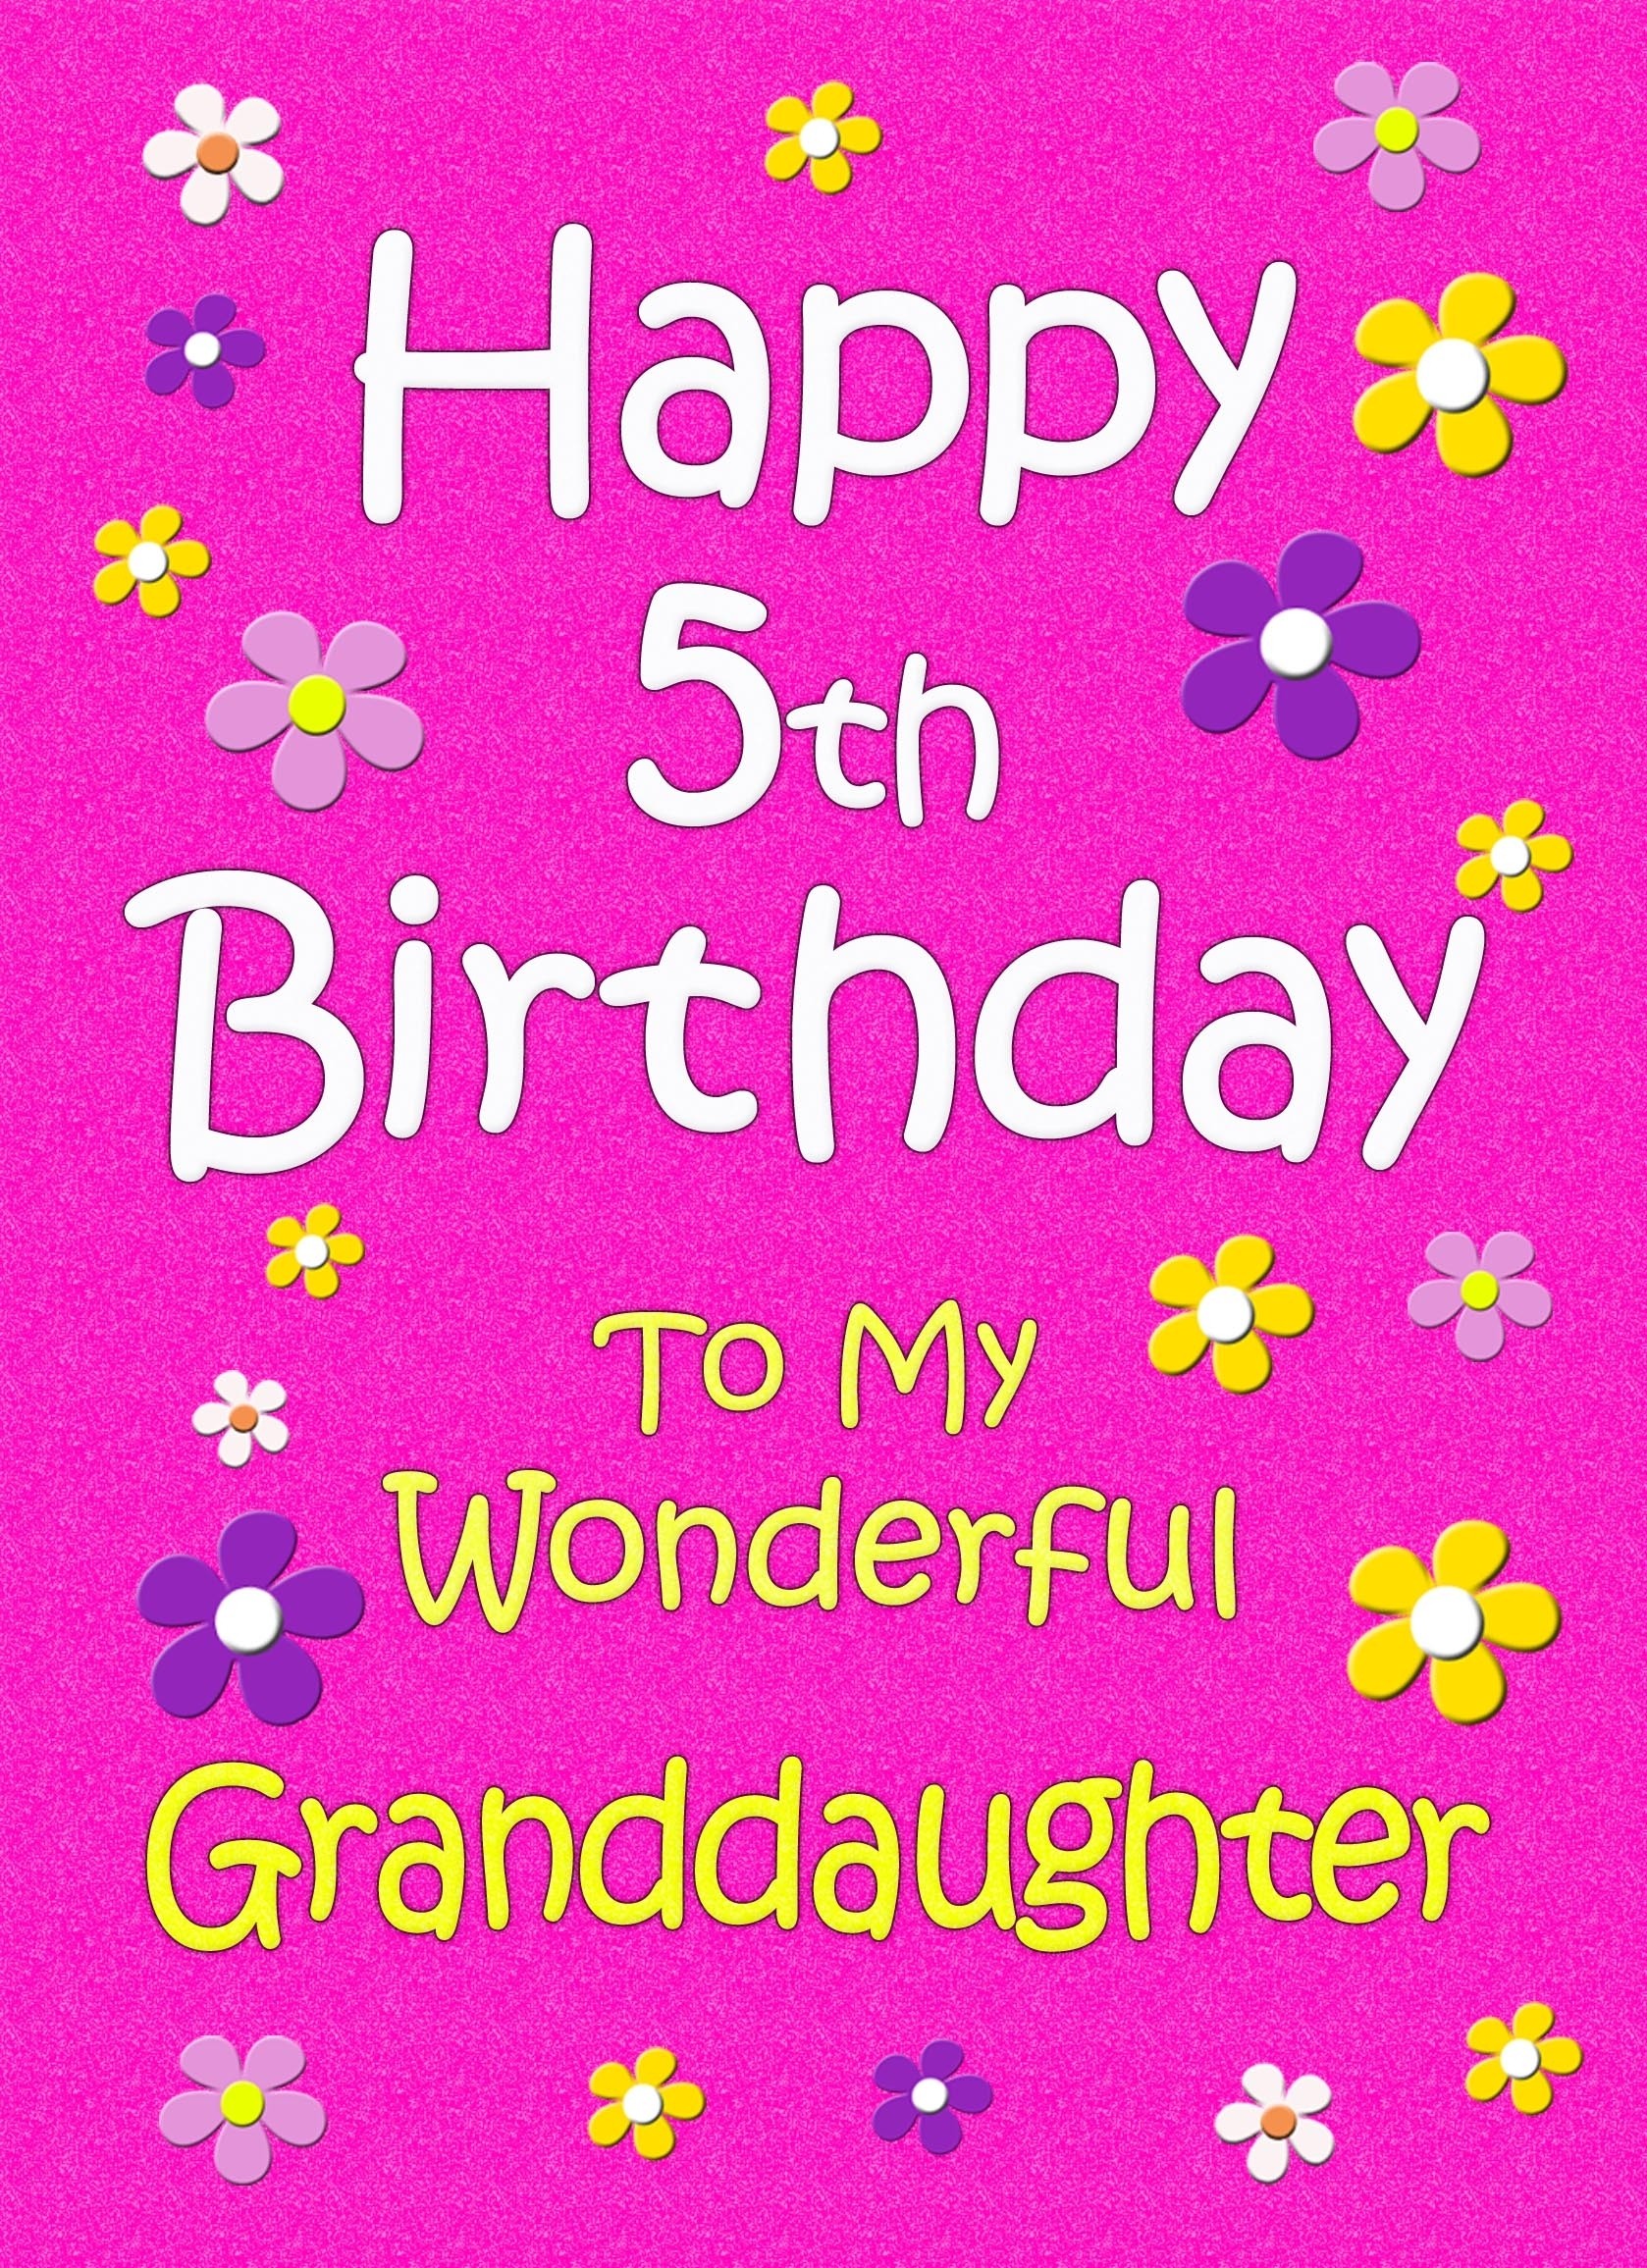 Granddaughter 5th Birthday Card (Pink)